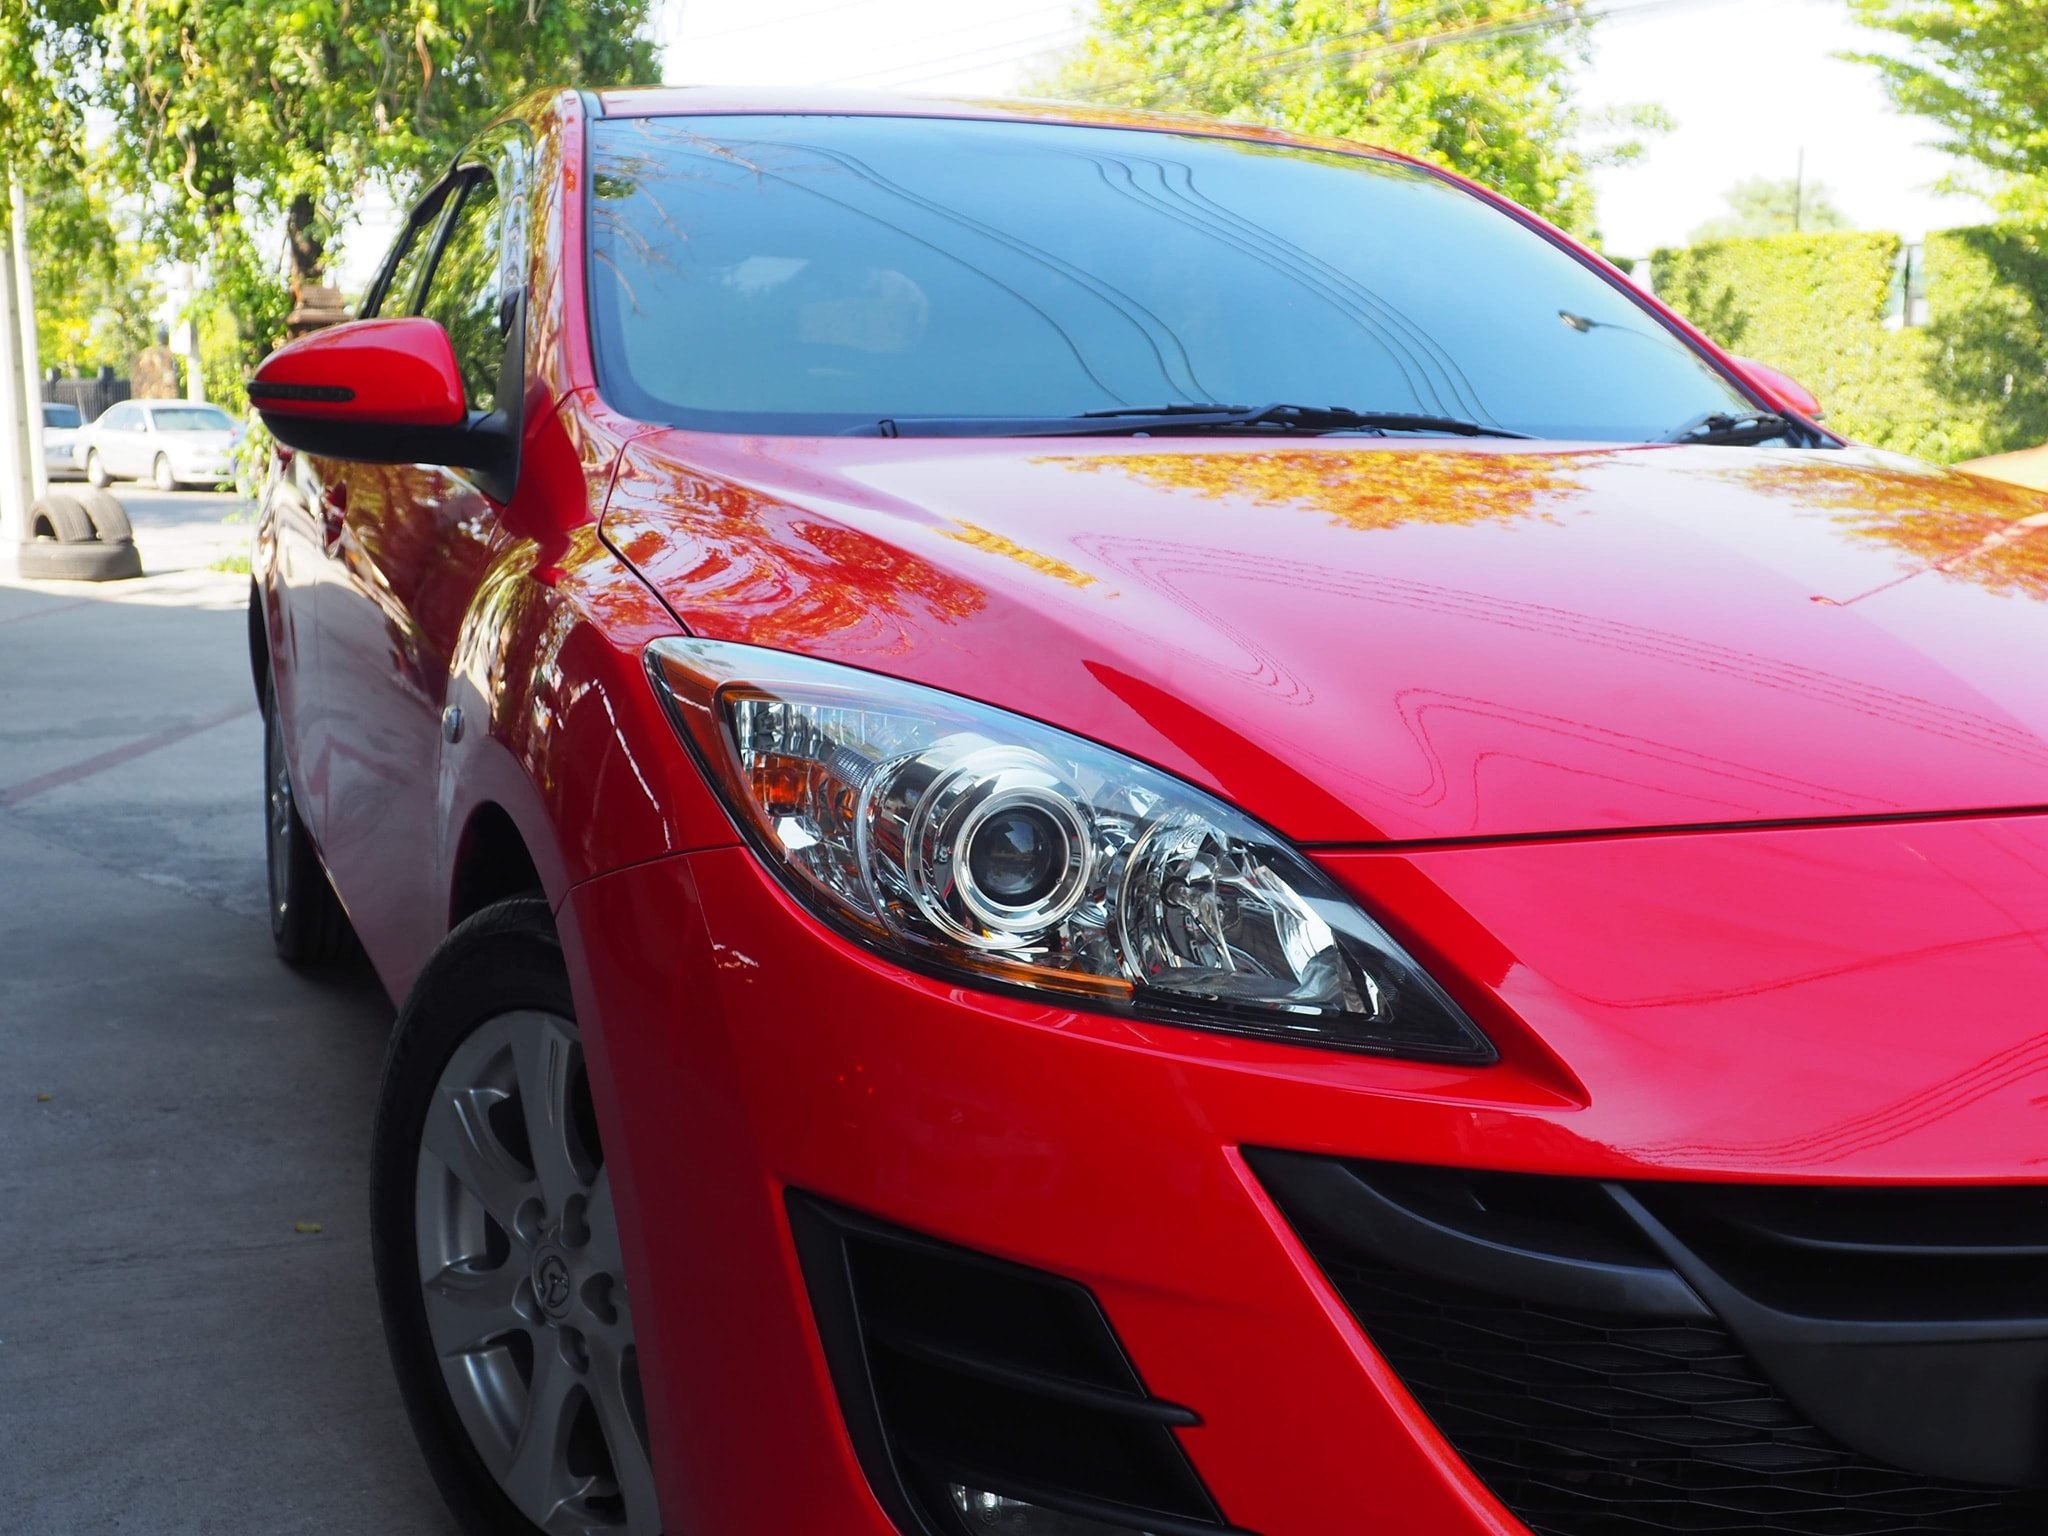 Mazda 3 ปี 2013 สีแดง